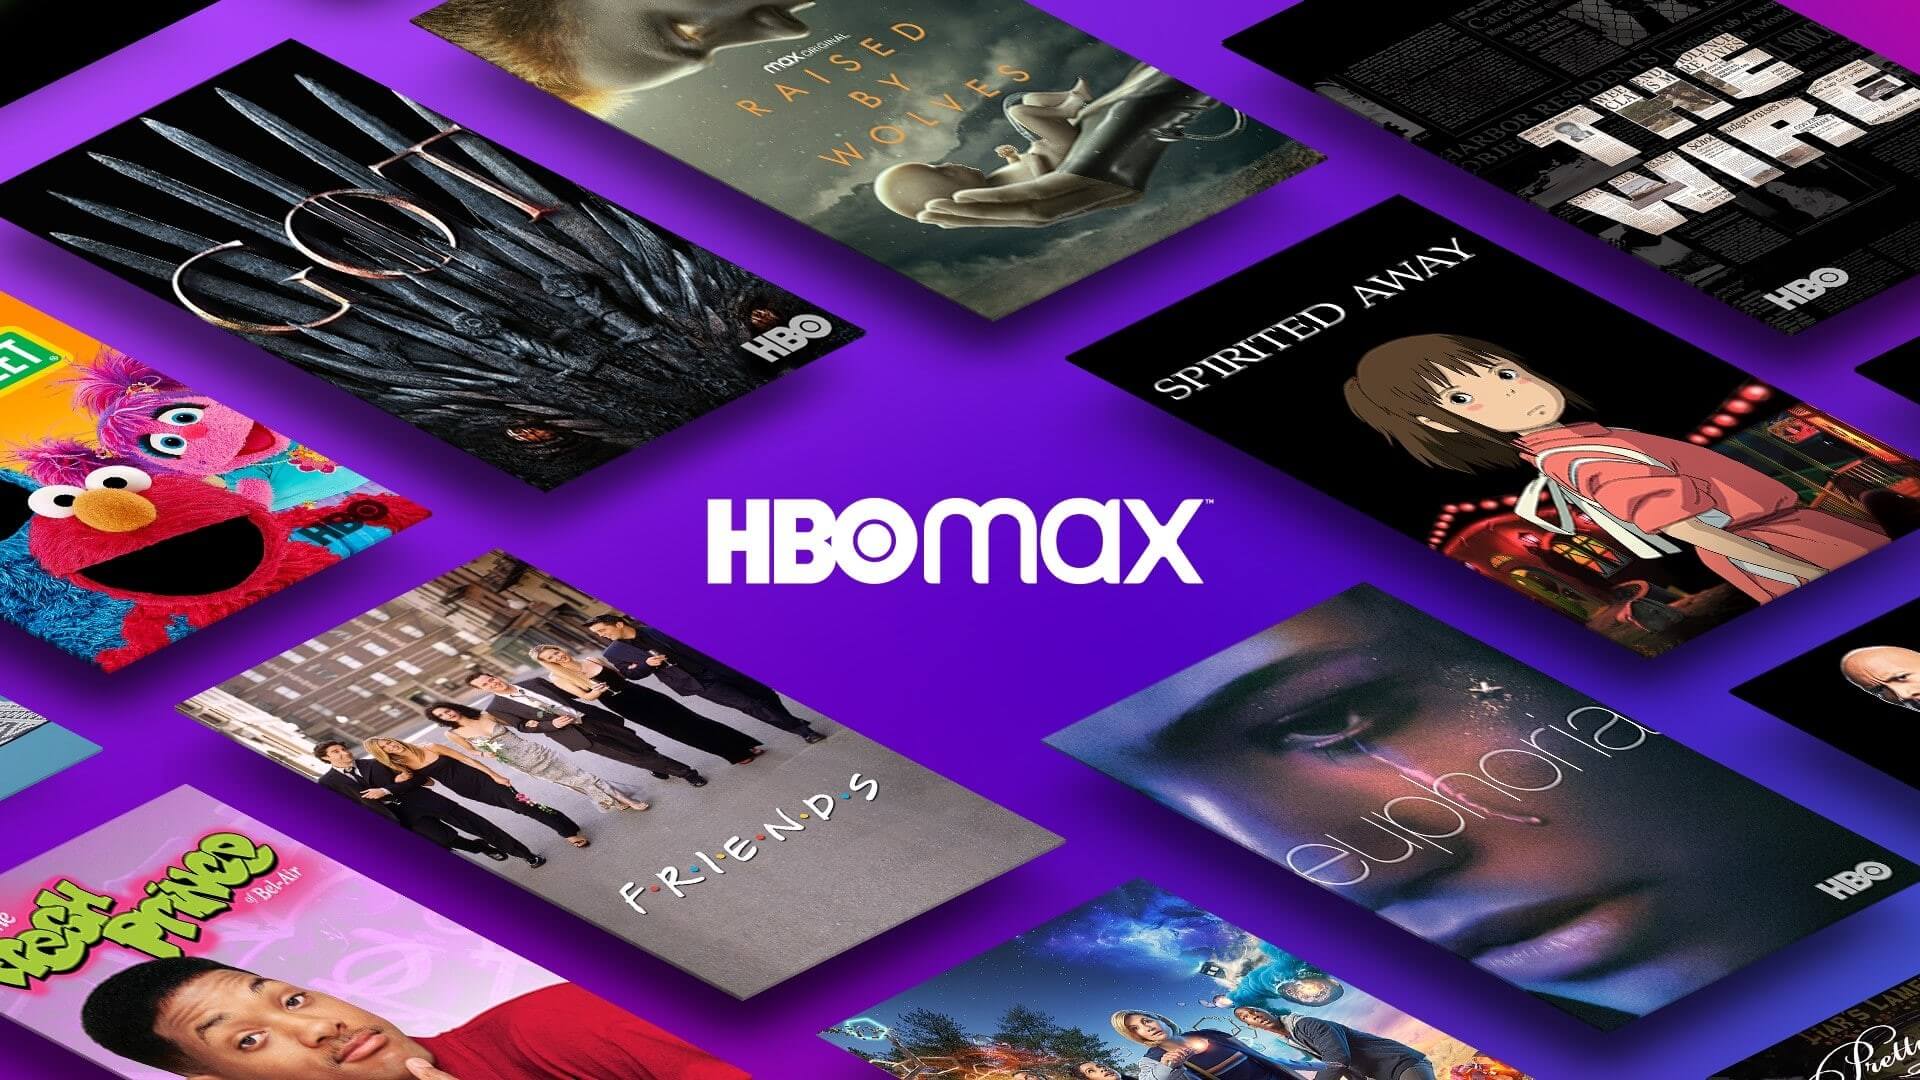 Imagem promocional da HBO Max mostrando alguns de seus títulos